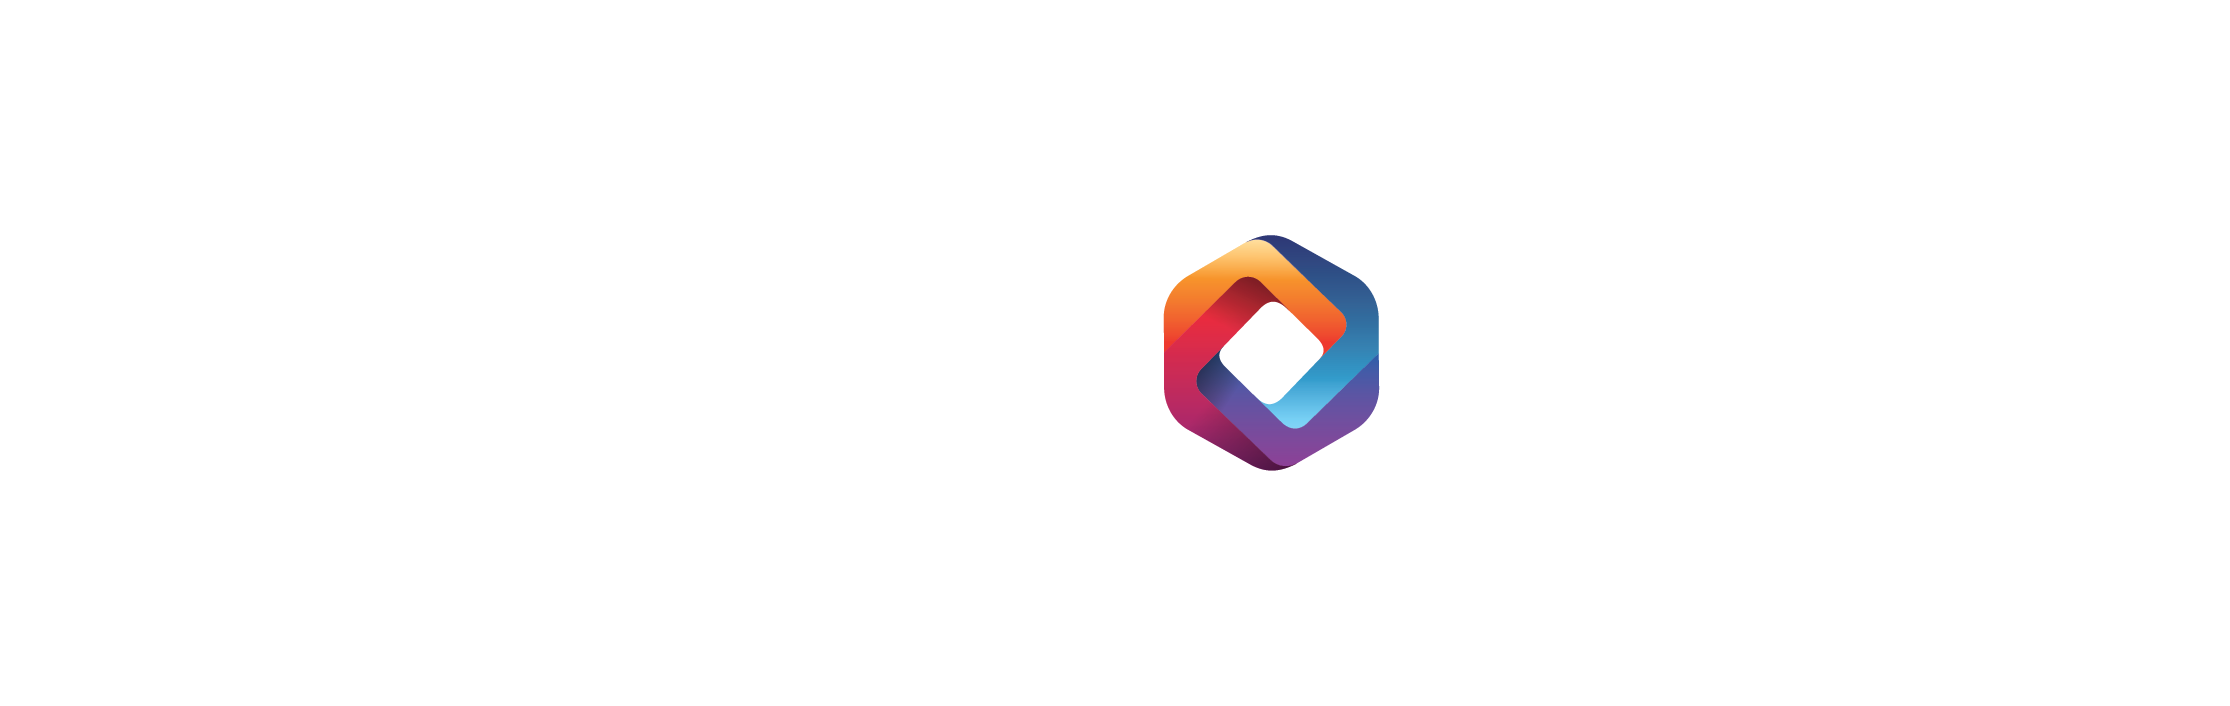 IDMWORKS logo all white transparent